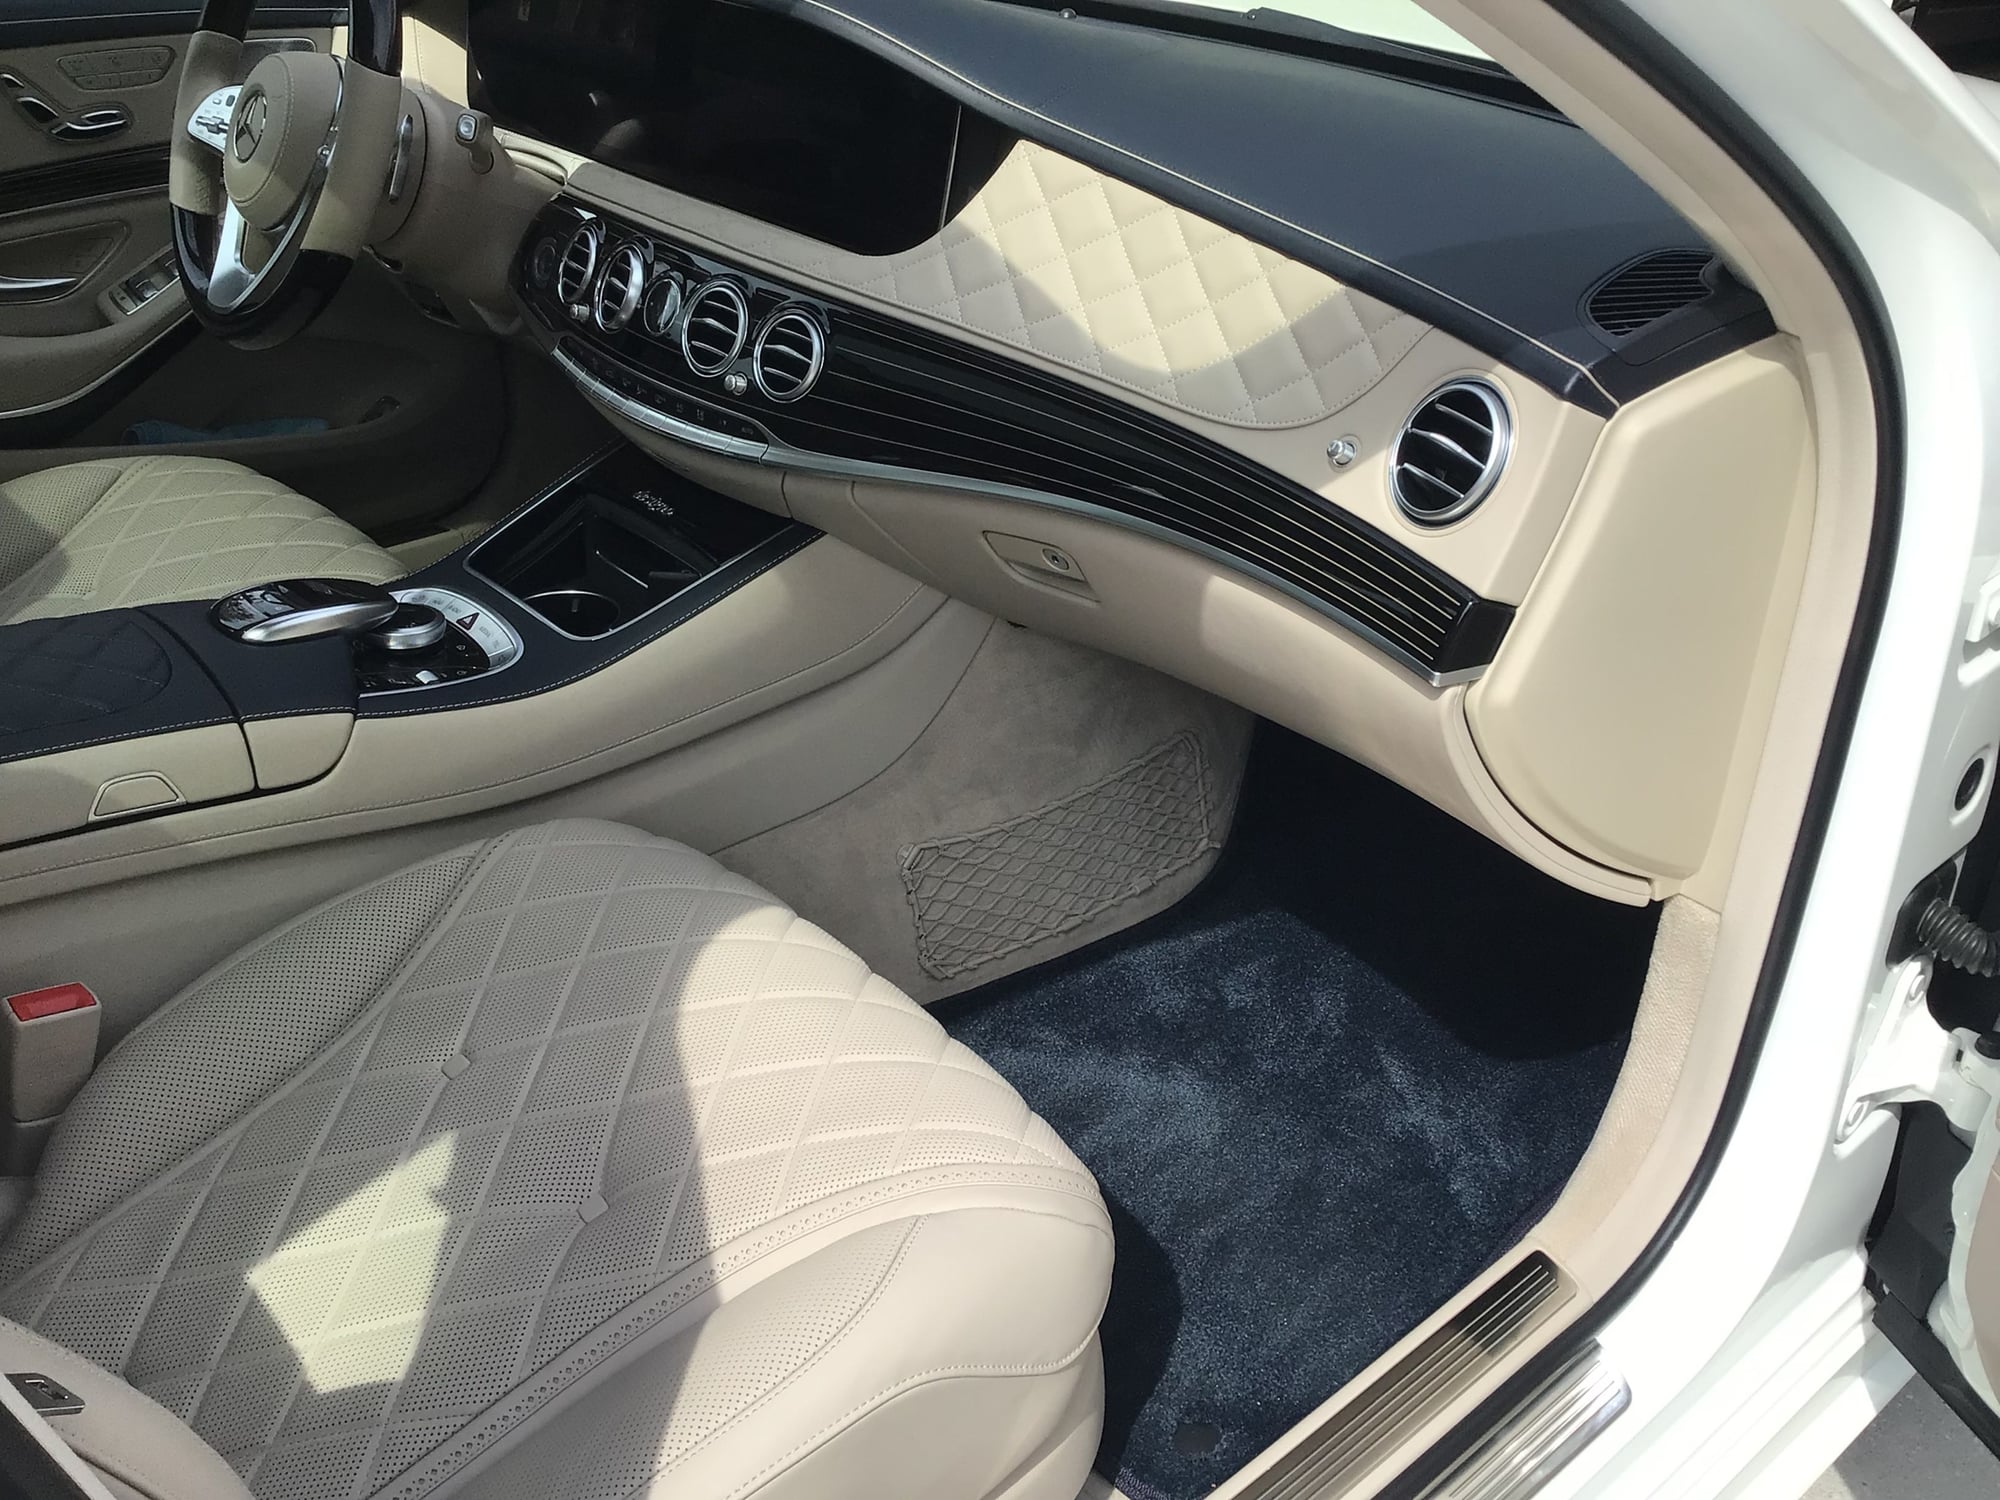 2023 Diamond Vegan Leather Floor Mats fits W223 Mercedes Maybach